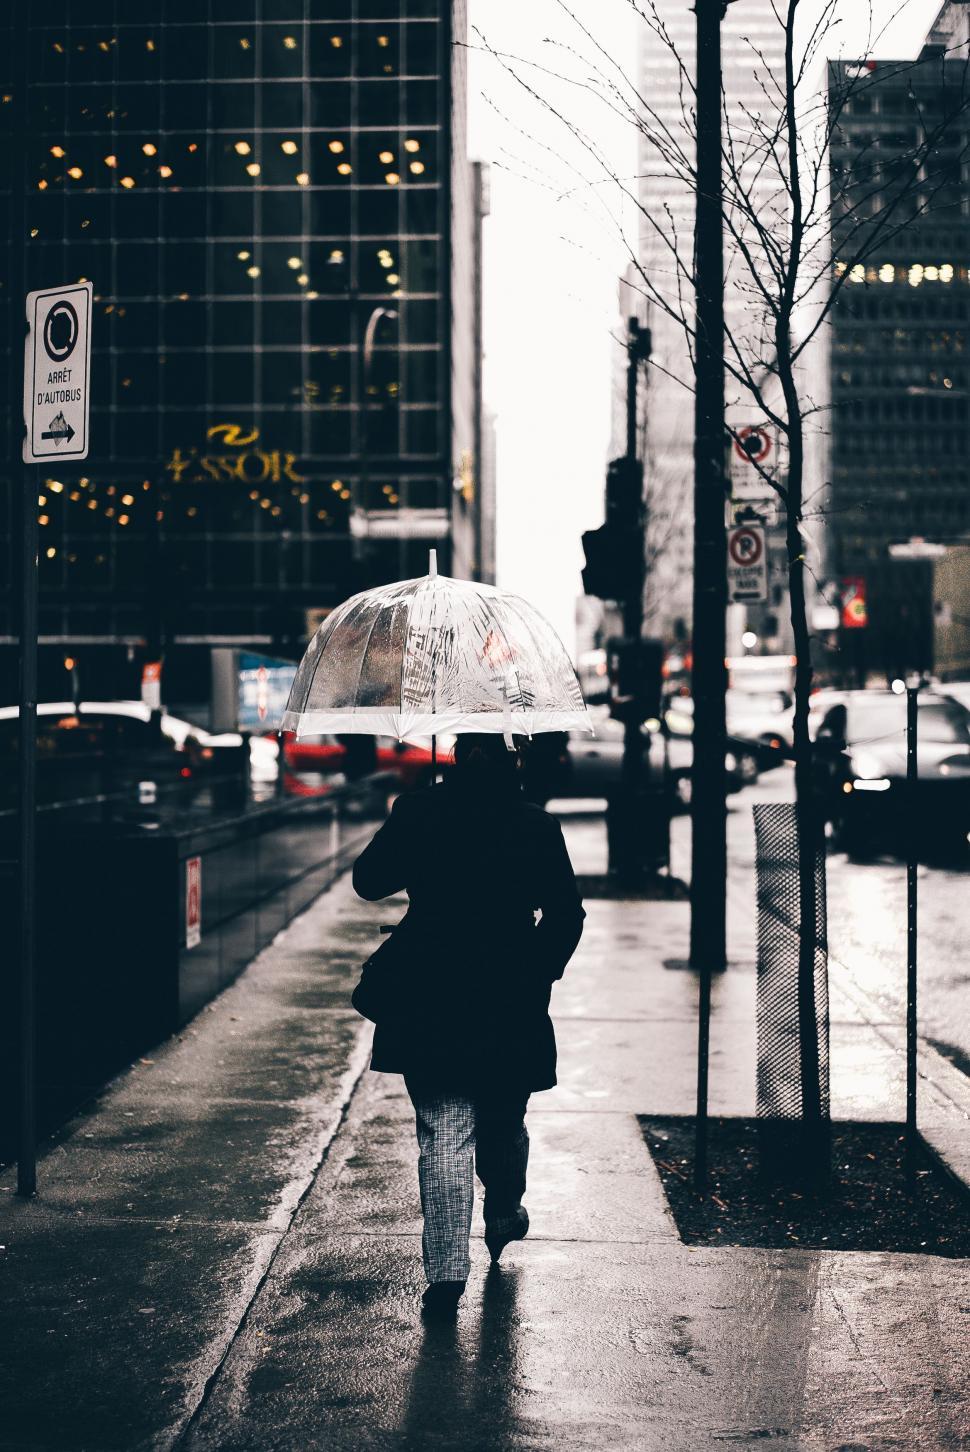 Free Image of Person Walking Down Street Holding Umbrella 